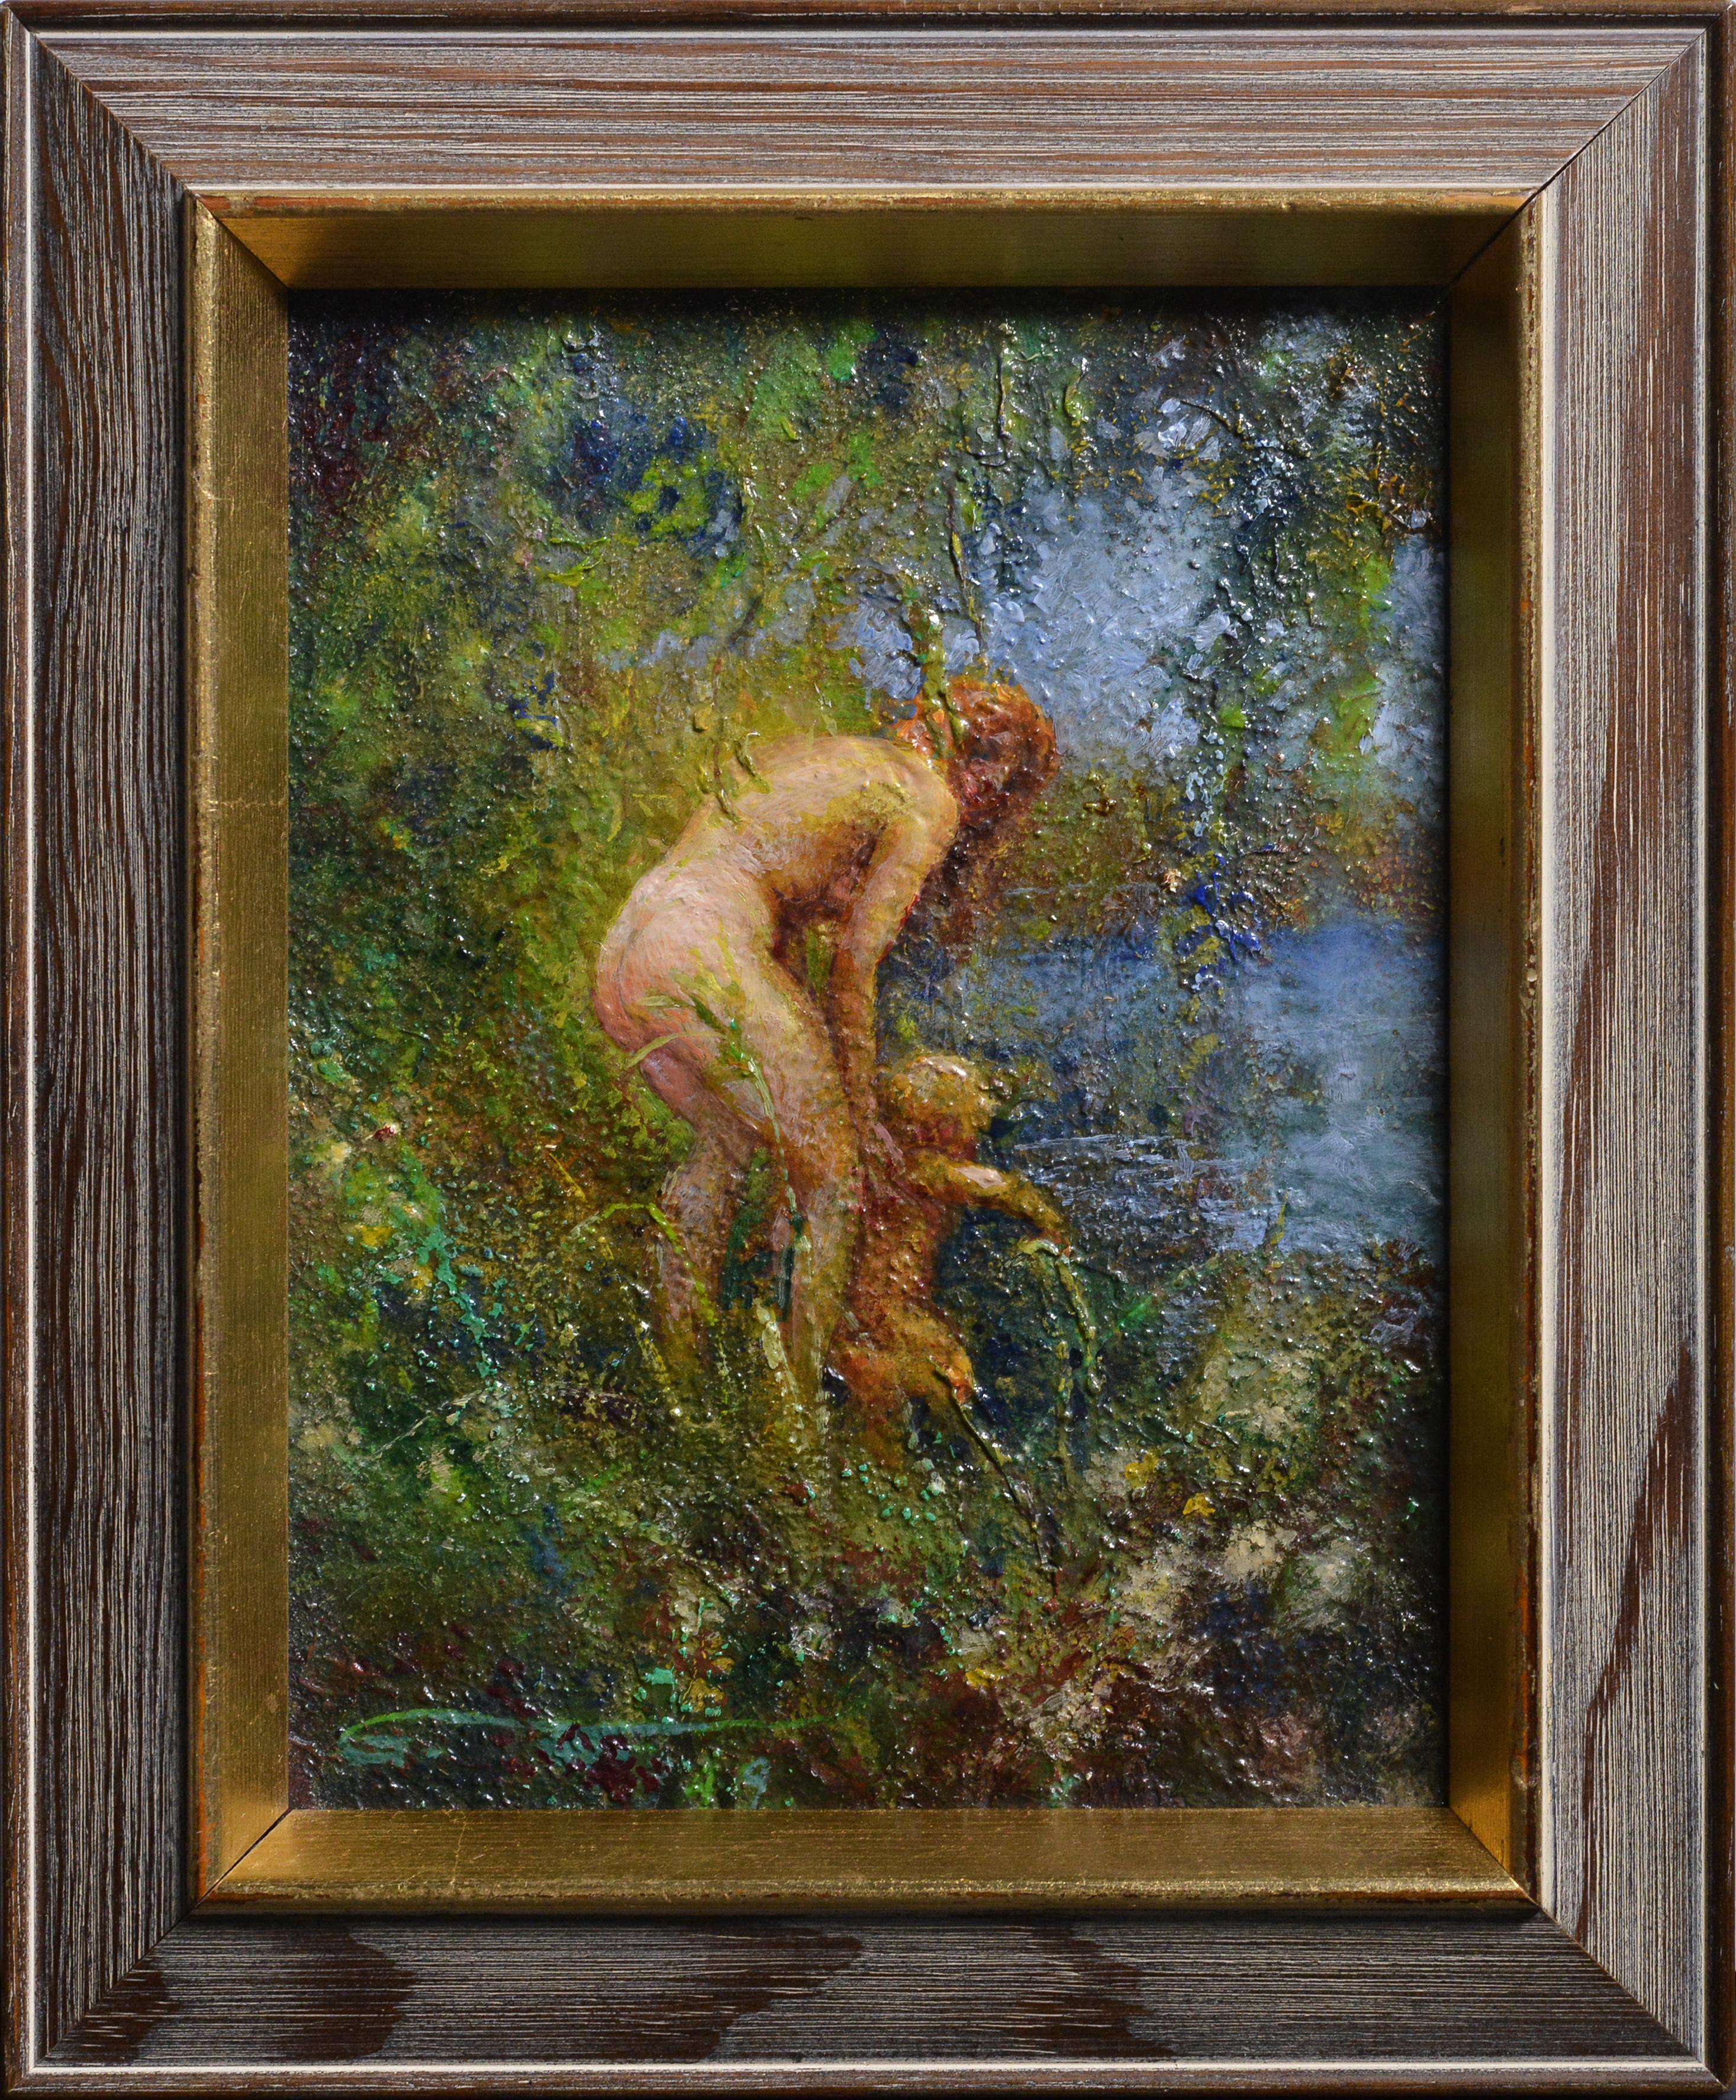 Ernst Gunnar Widholm Figurative Painting – Frau im Fluss badet Kind, ca. 1932, Ölgemälde des schwedischen Meisters Widholm